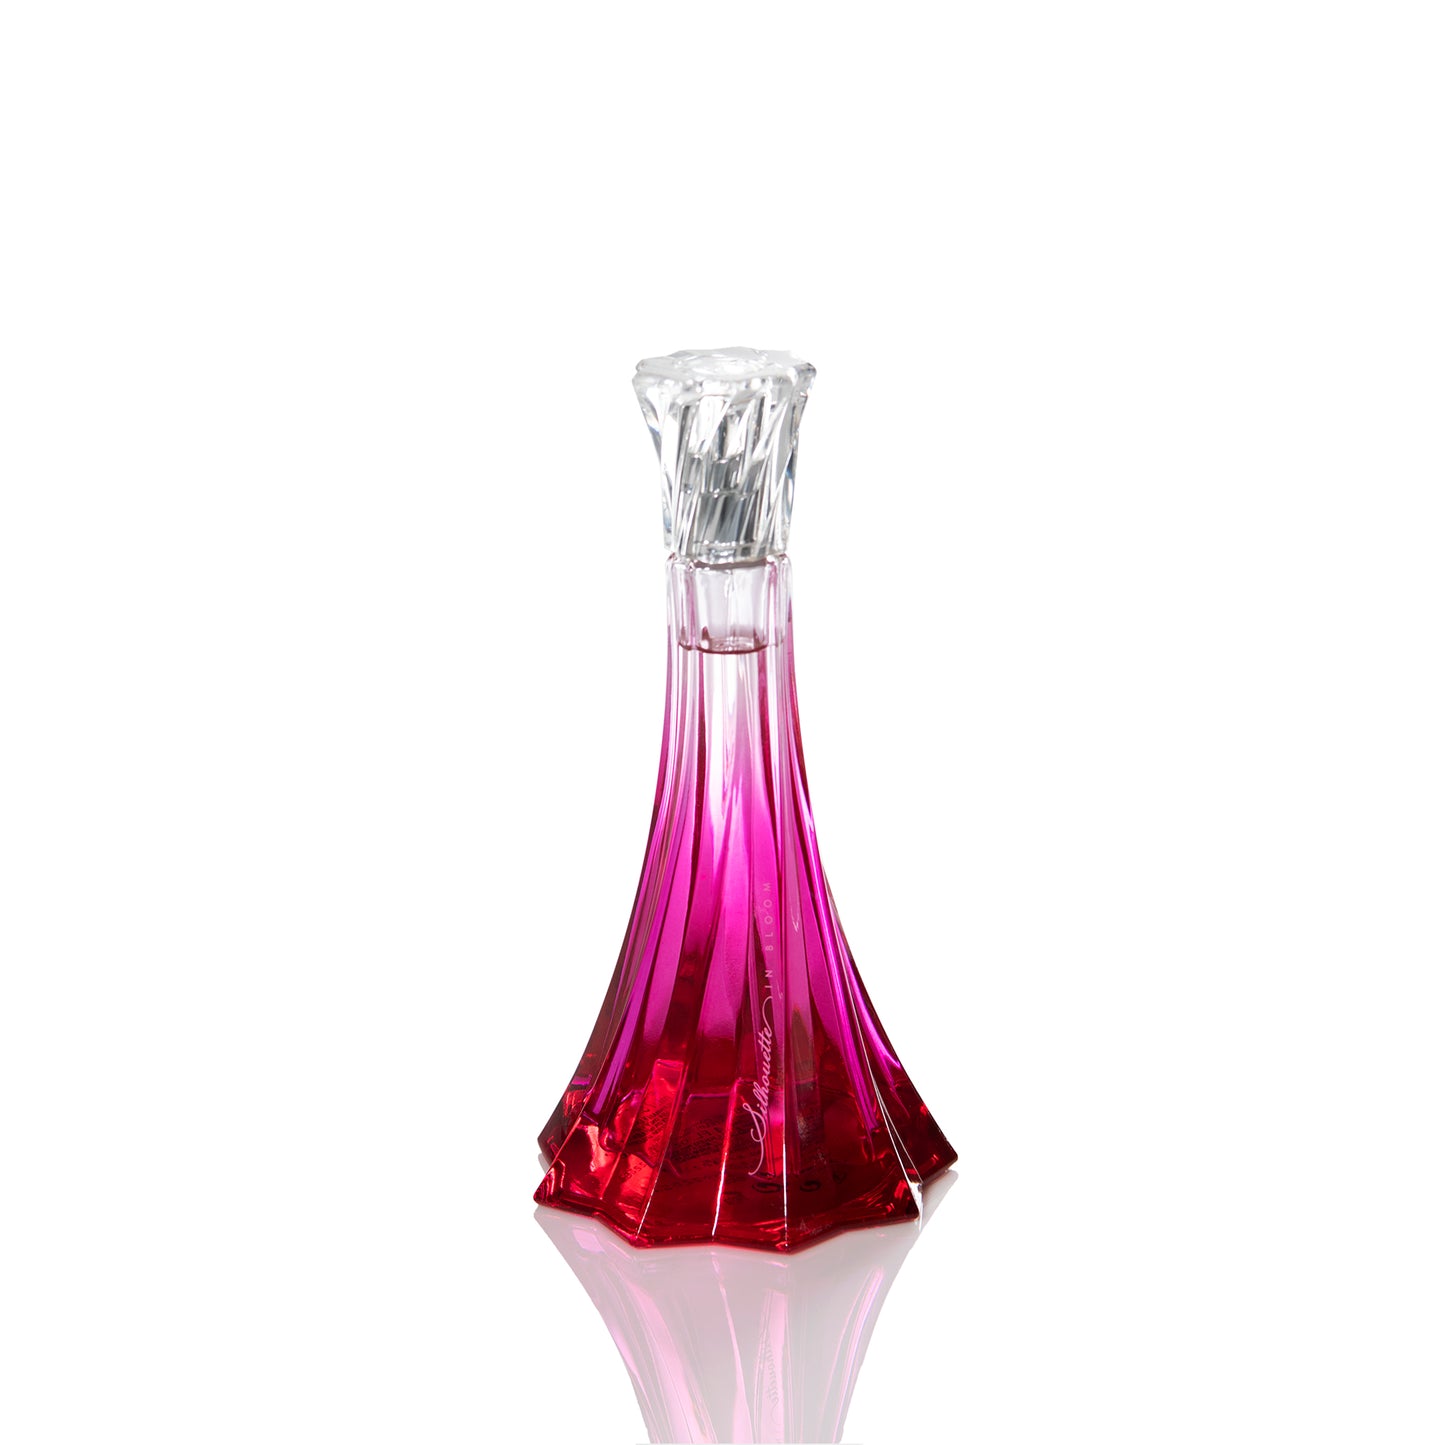 Silhouette in Bloom 3.4 oz Eau de Parfum